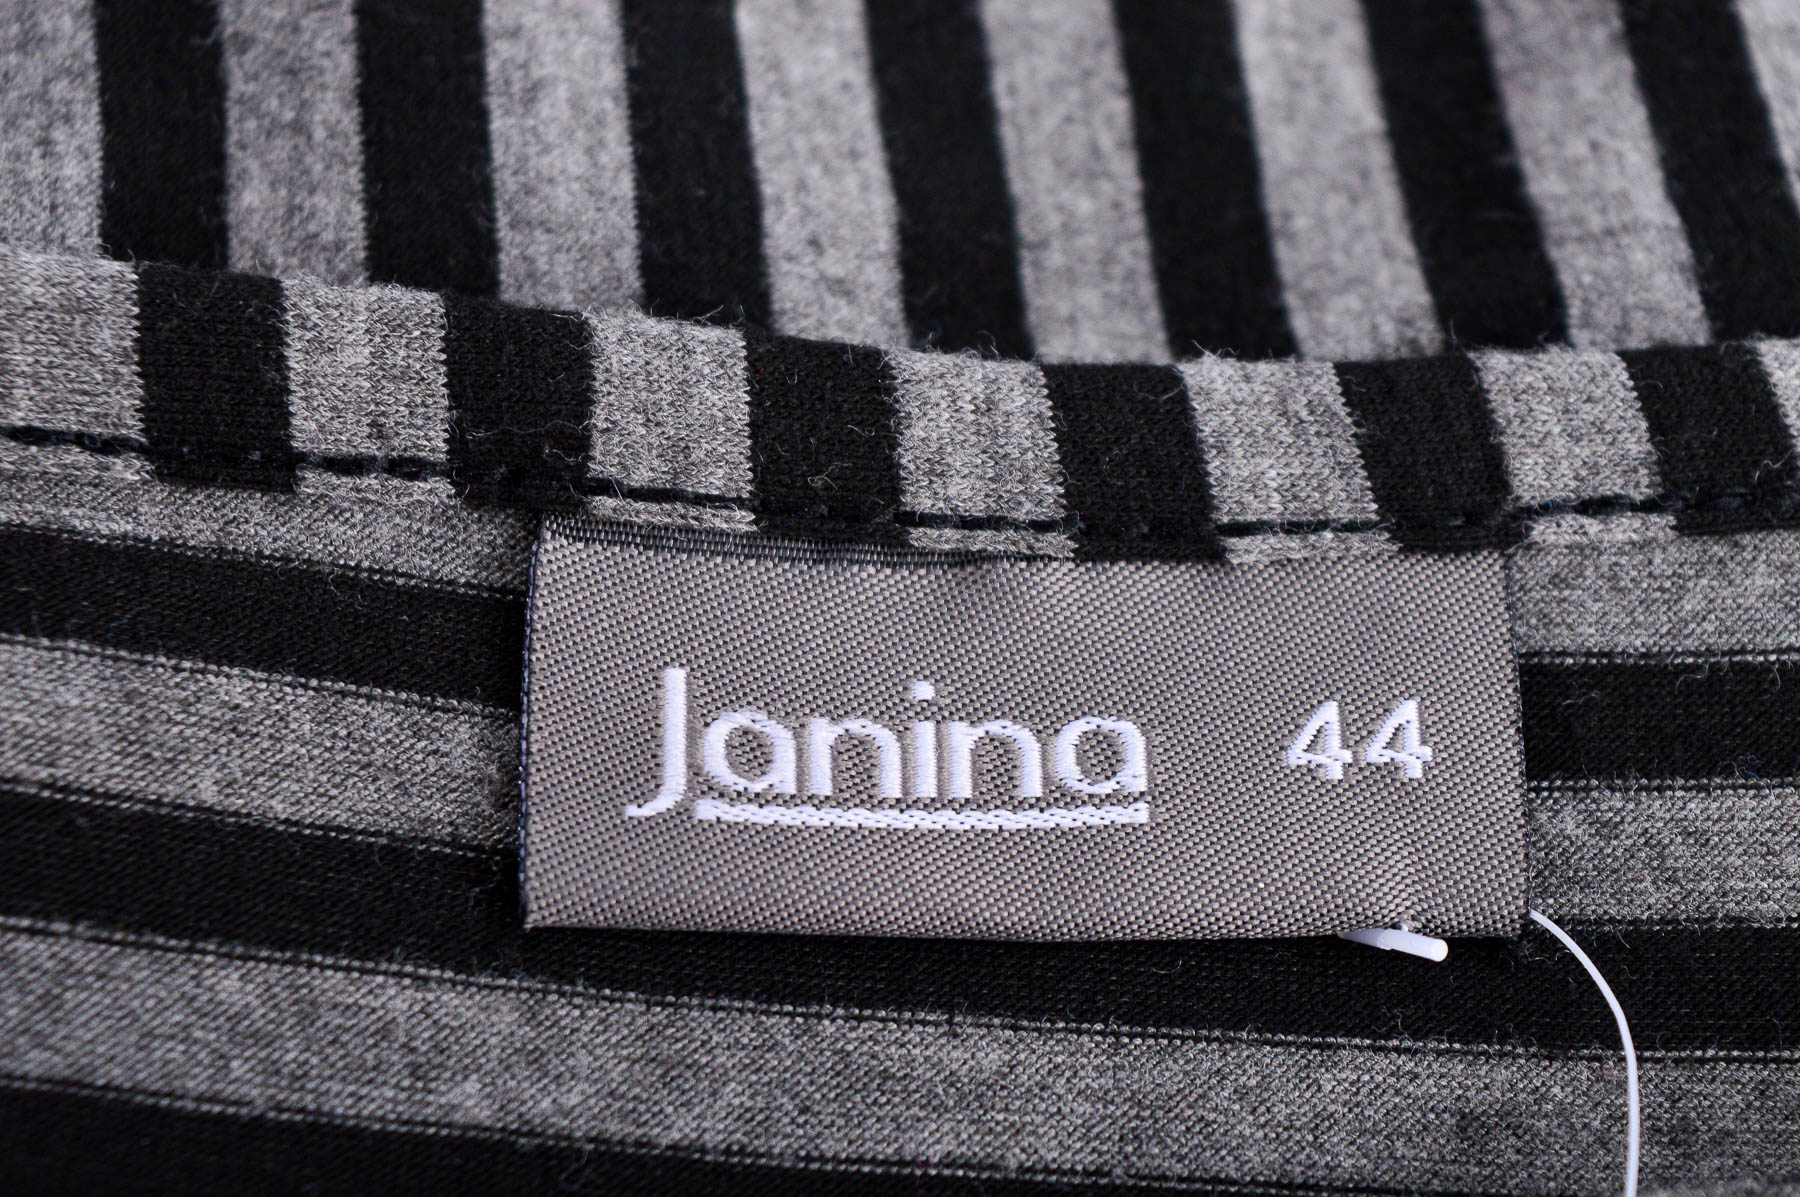 Women's tunic - Janina - 2